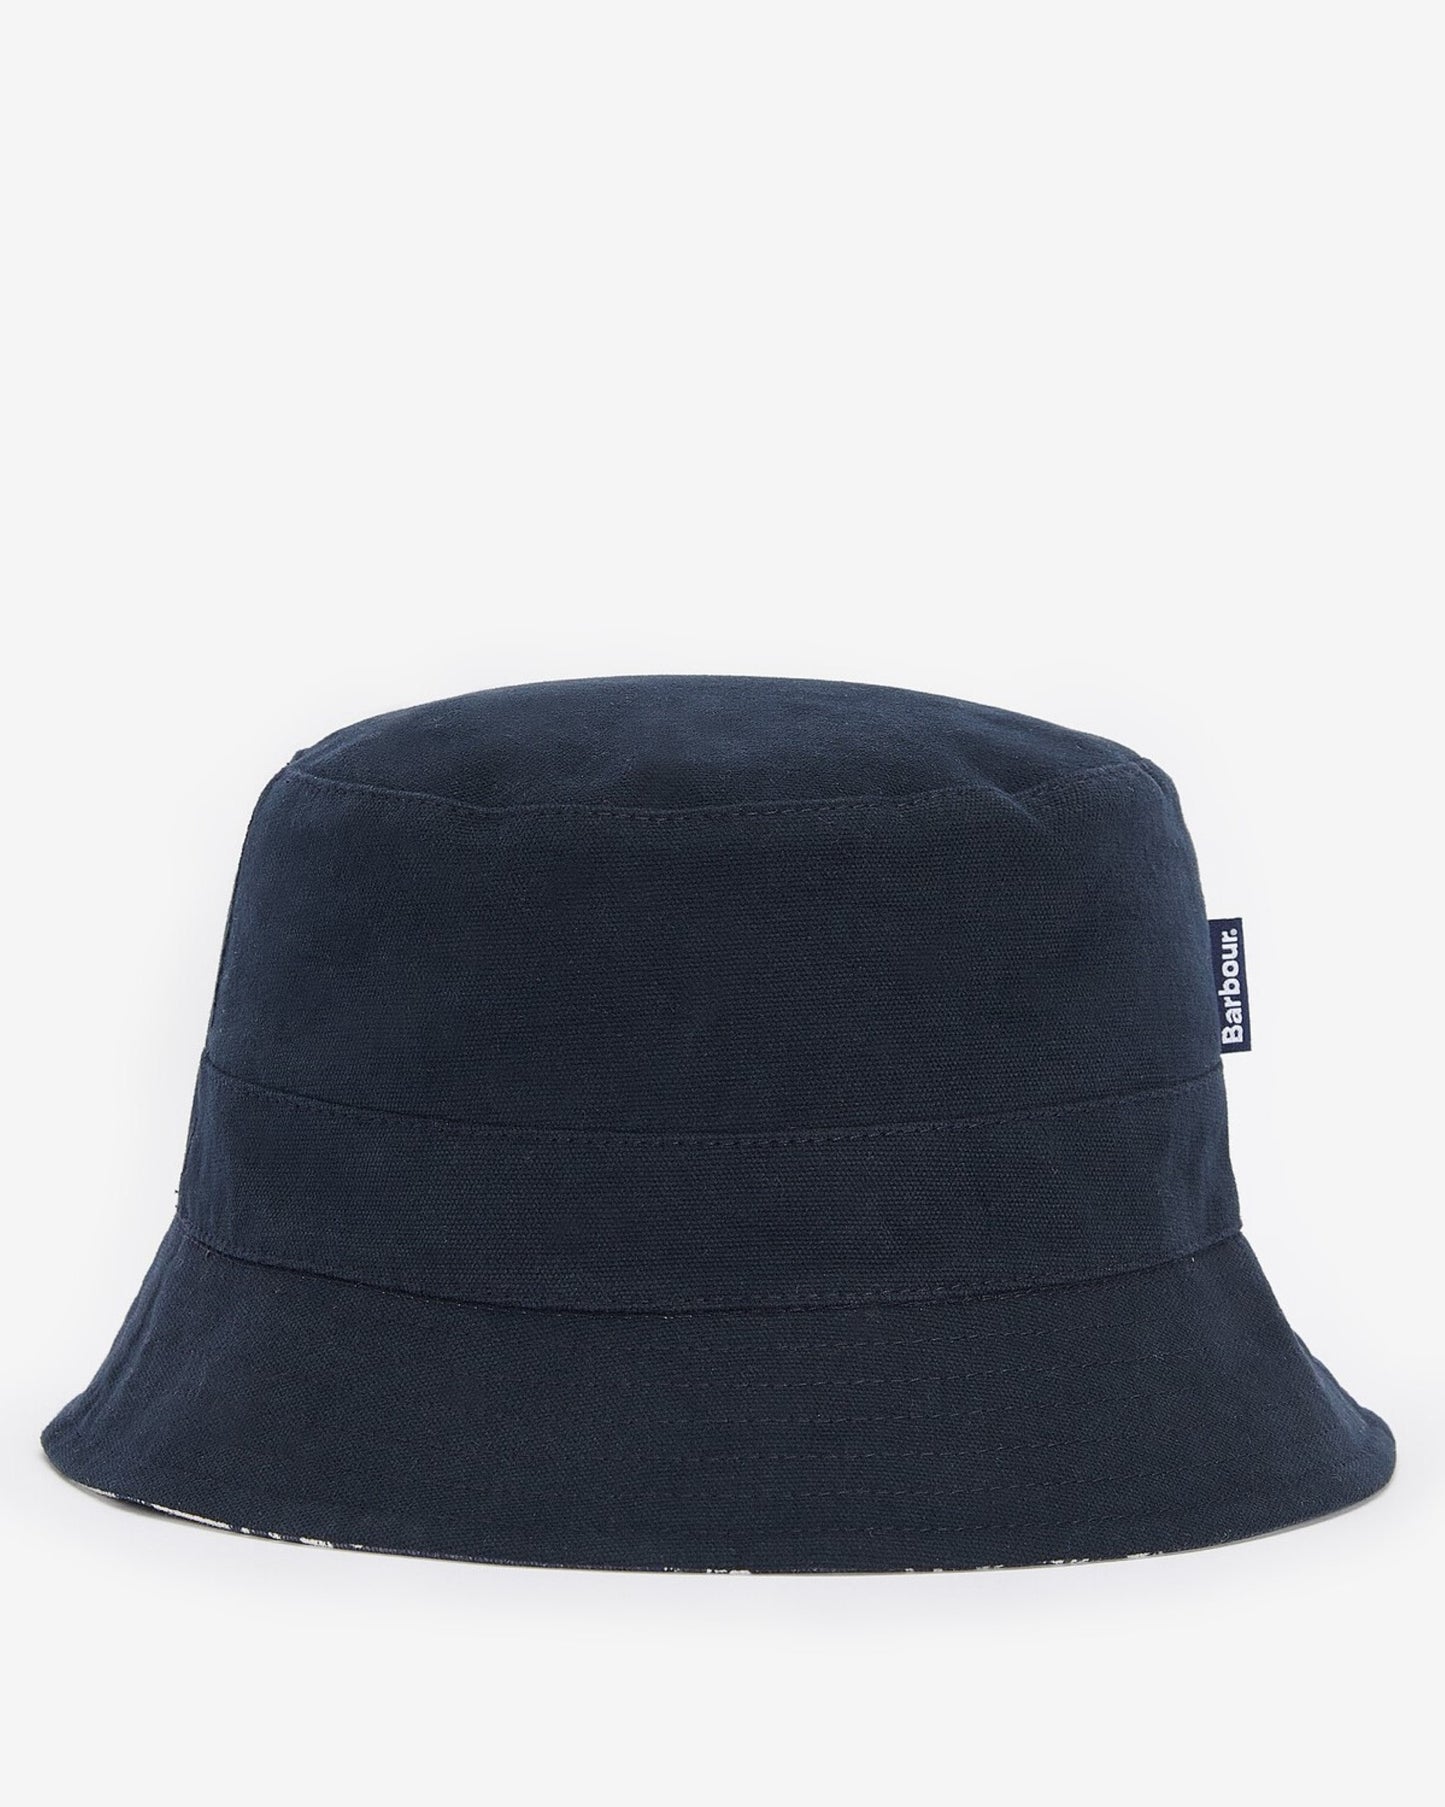 Cornwall Reversible Bucket hat